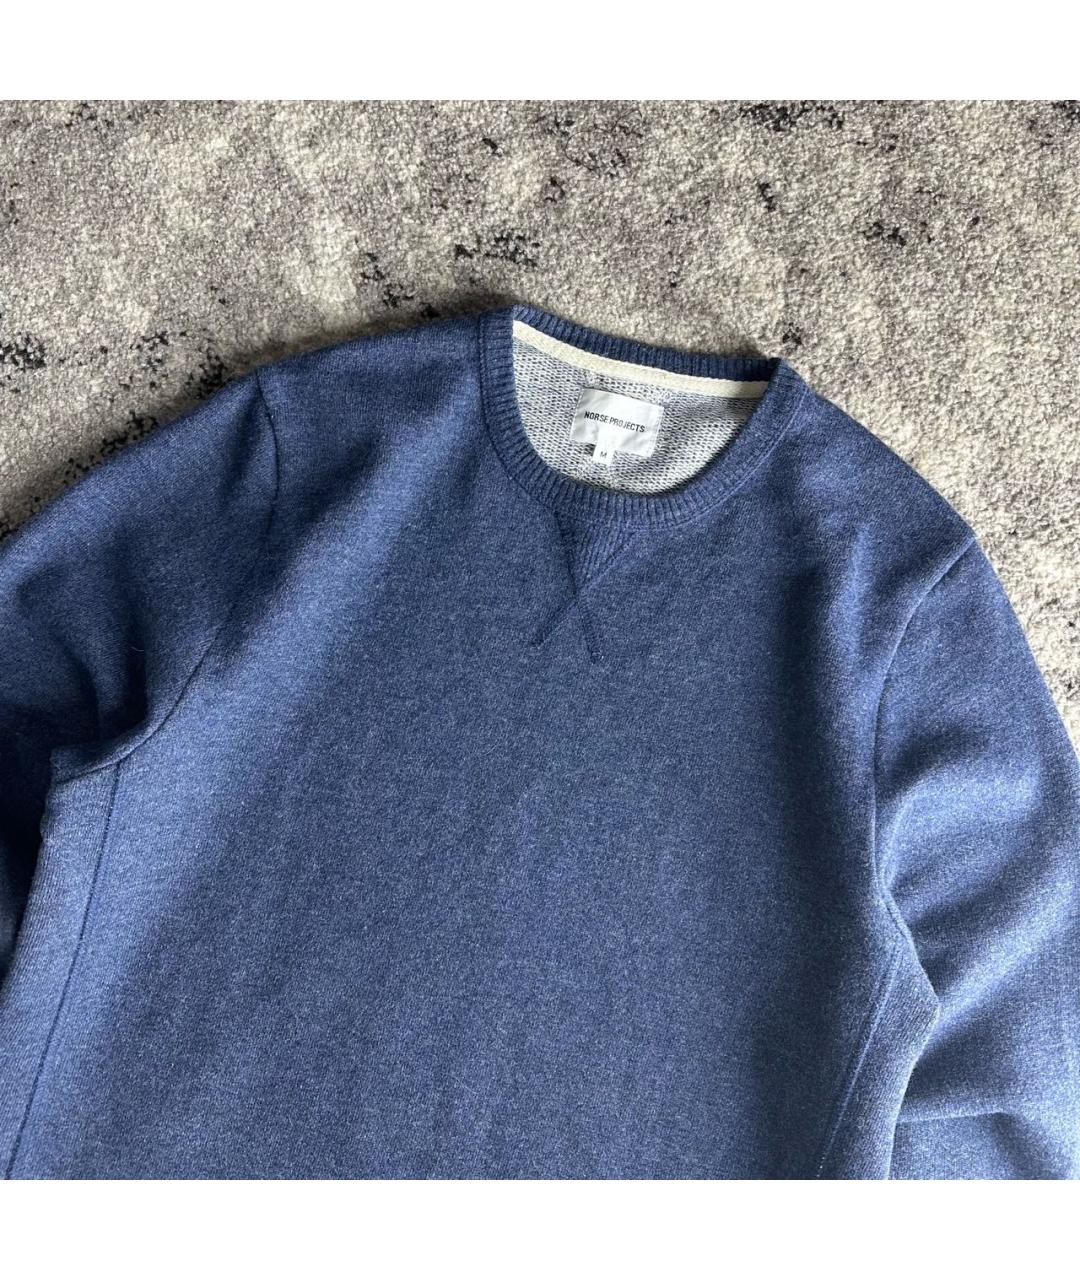 NORSE PROJECTS Темно-синий шерстяной джемпер / свитер, фото 2